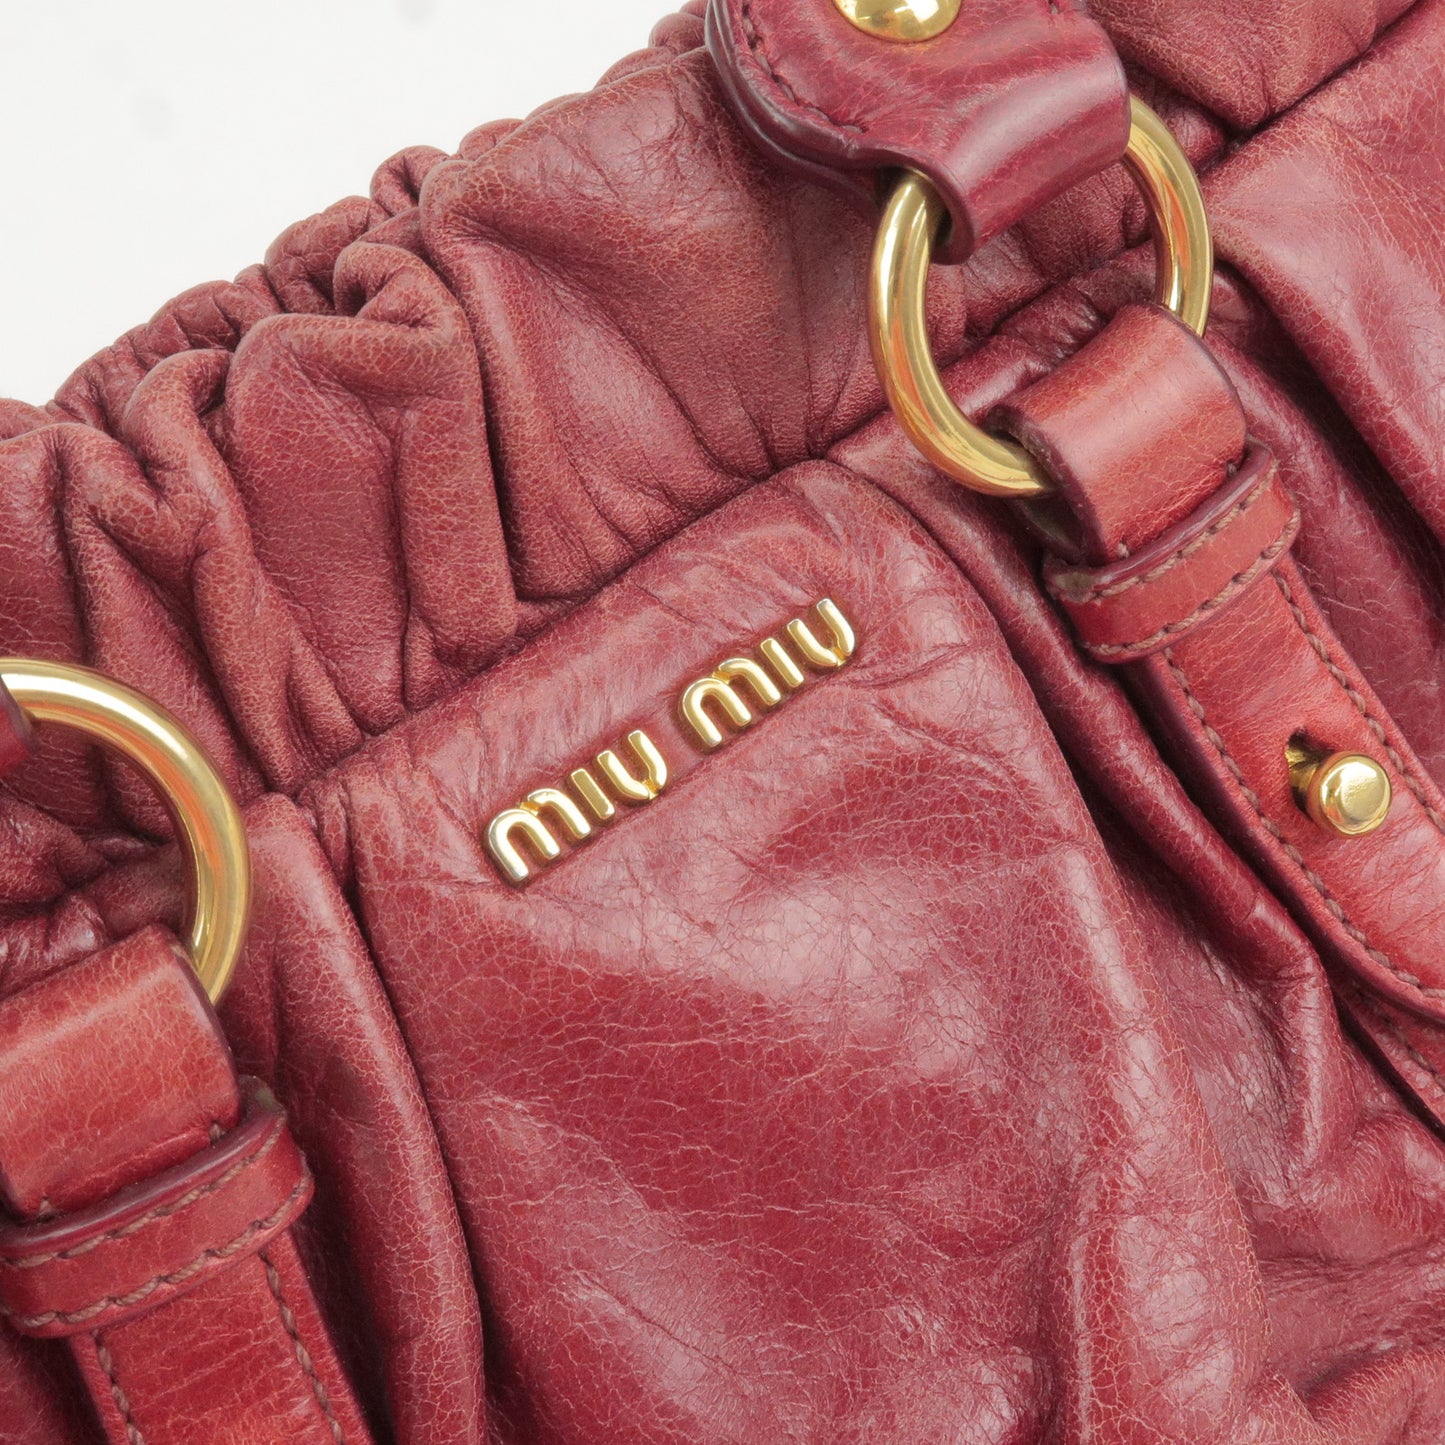 MIU MIU Logo Leather 2Way Bag Hand Bag Shoulder Bag Red RN0647